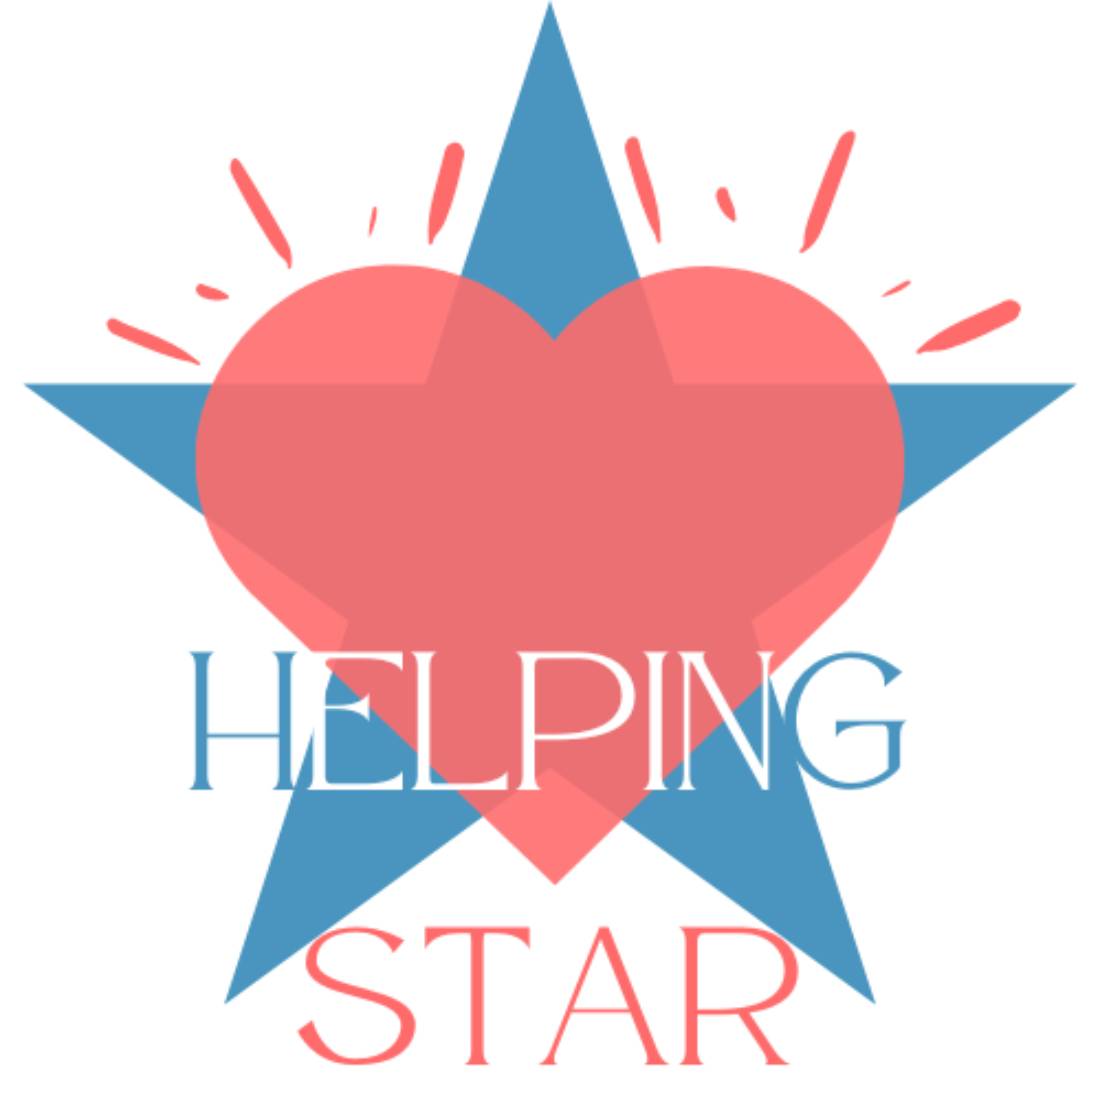 Helping Star Logo Design cover image.